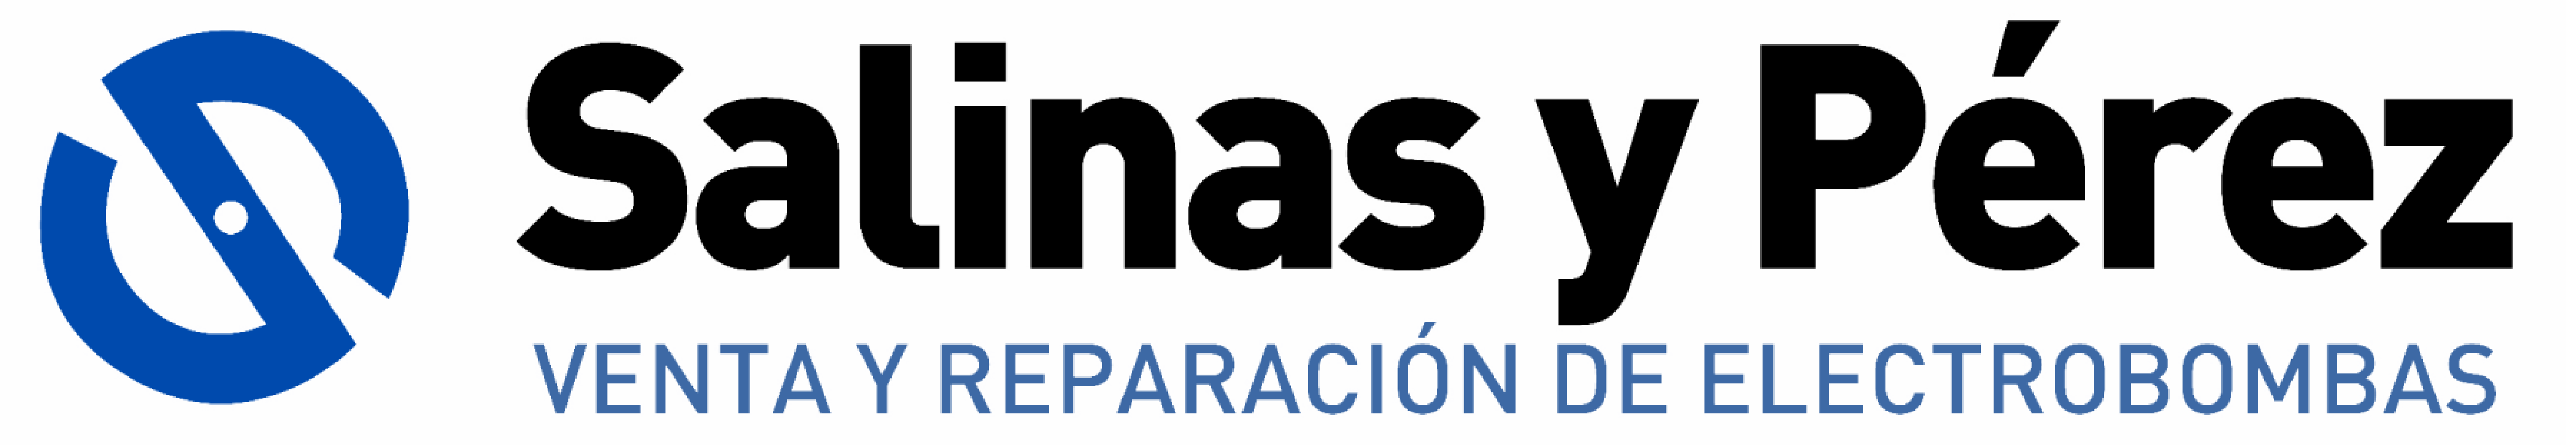 Salinas y Pérez logotipo oscuro